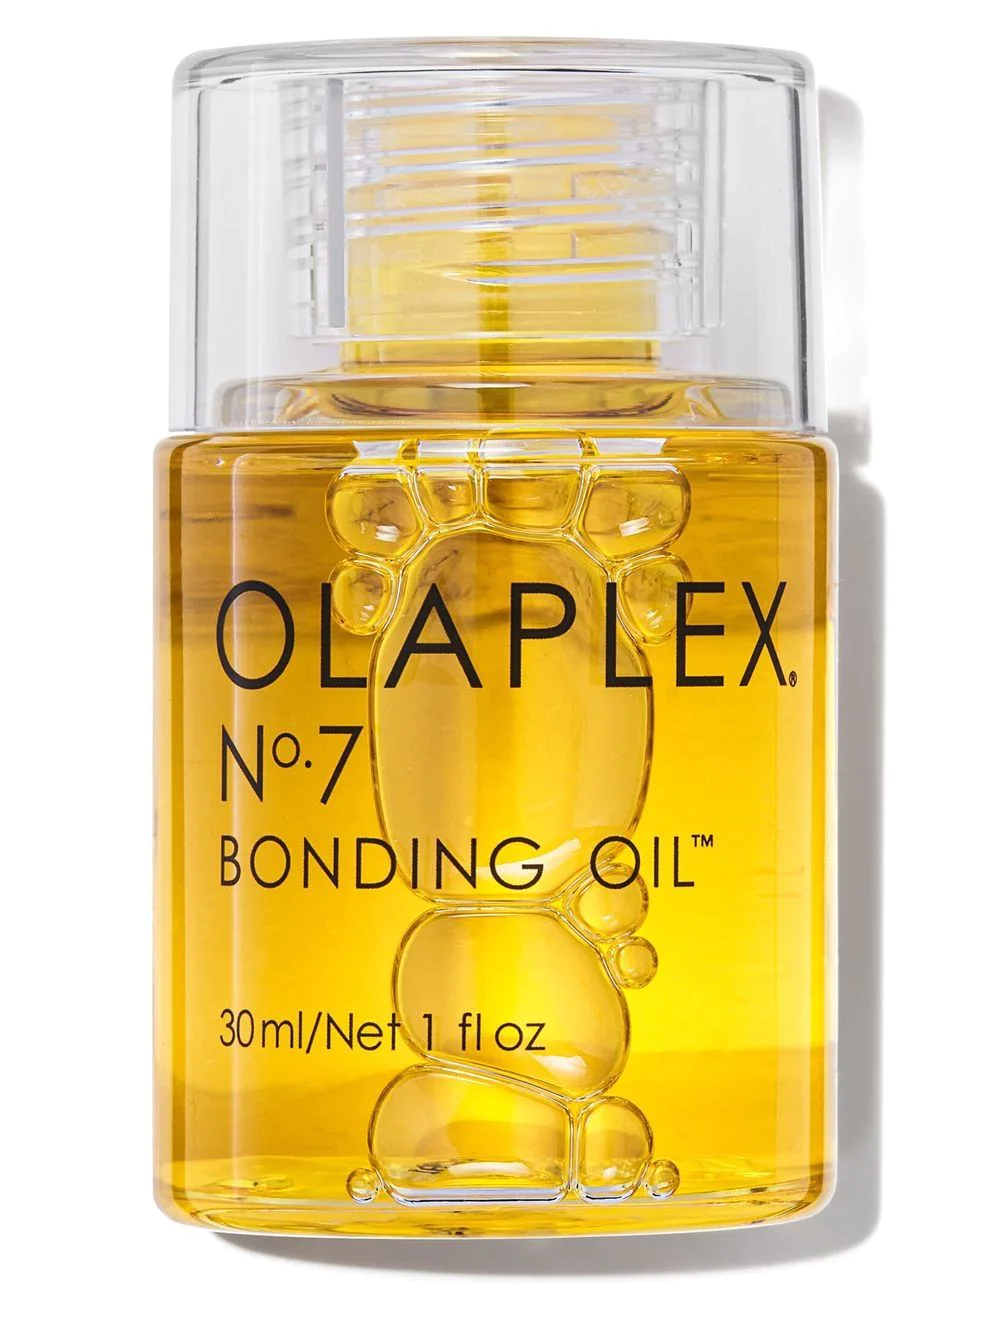 Olaplex
Nº.7 Bonding Oil hair treatment